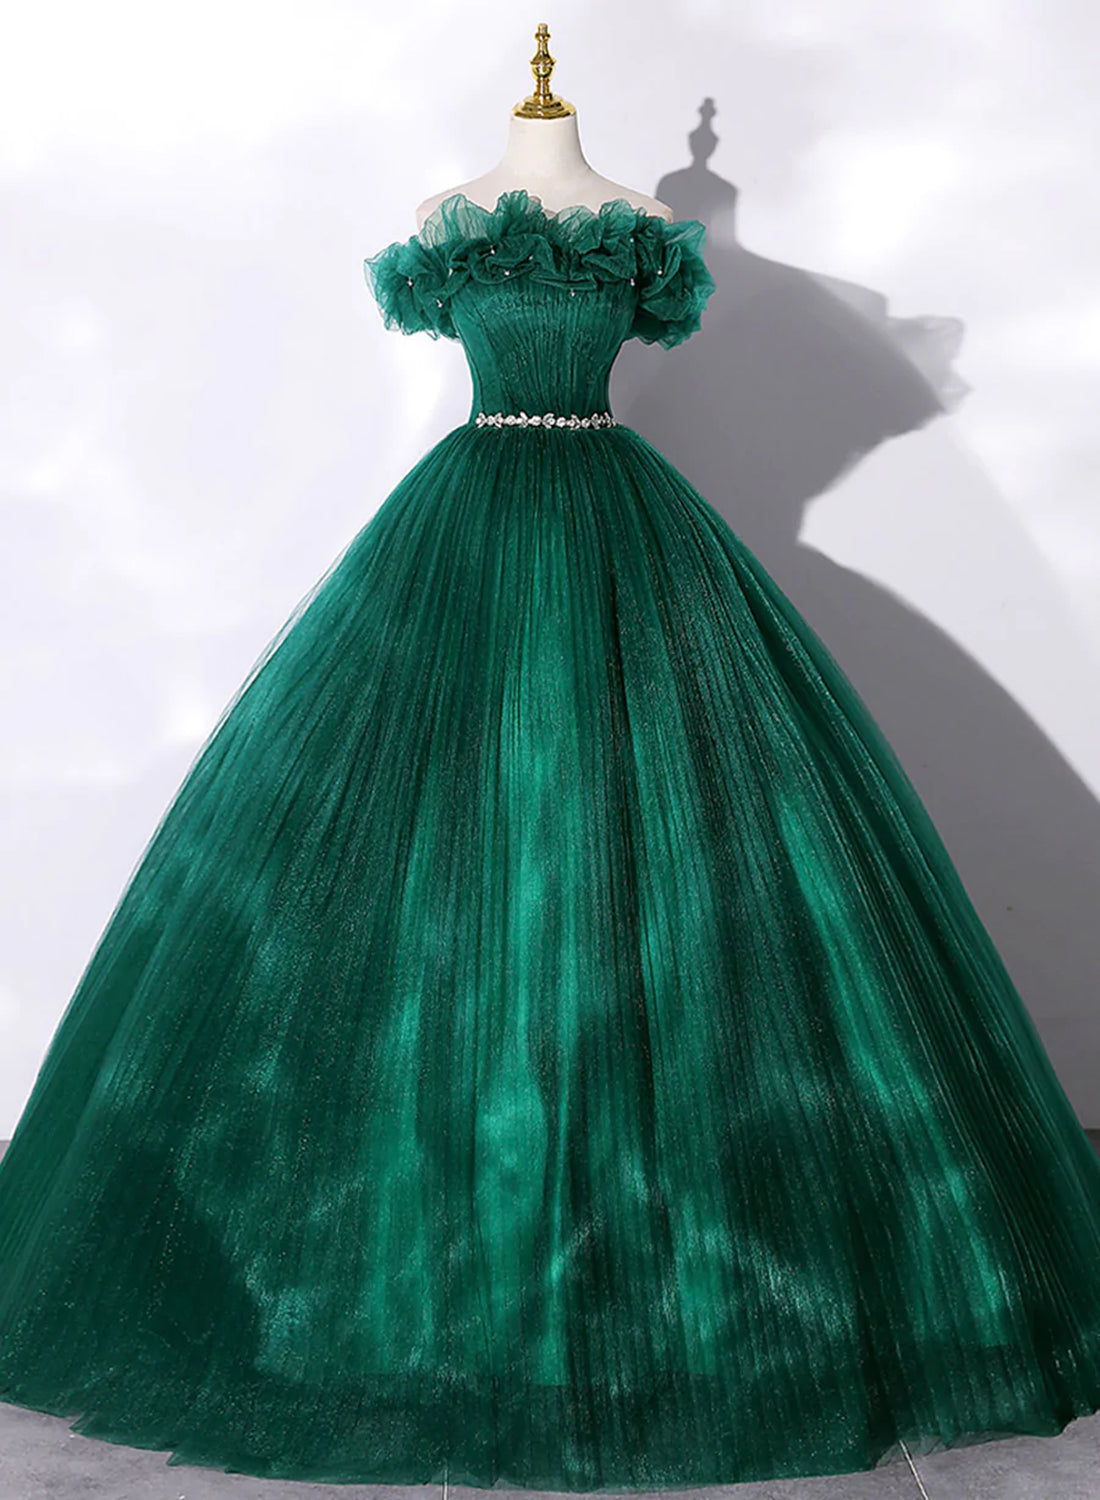 Prom Dress Ideas, Green Tulle Beaded Waist Ball Gown Sweet 16 Dress, Off Shoulder Green Prom Dress